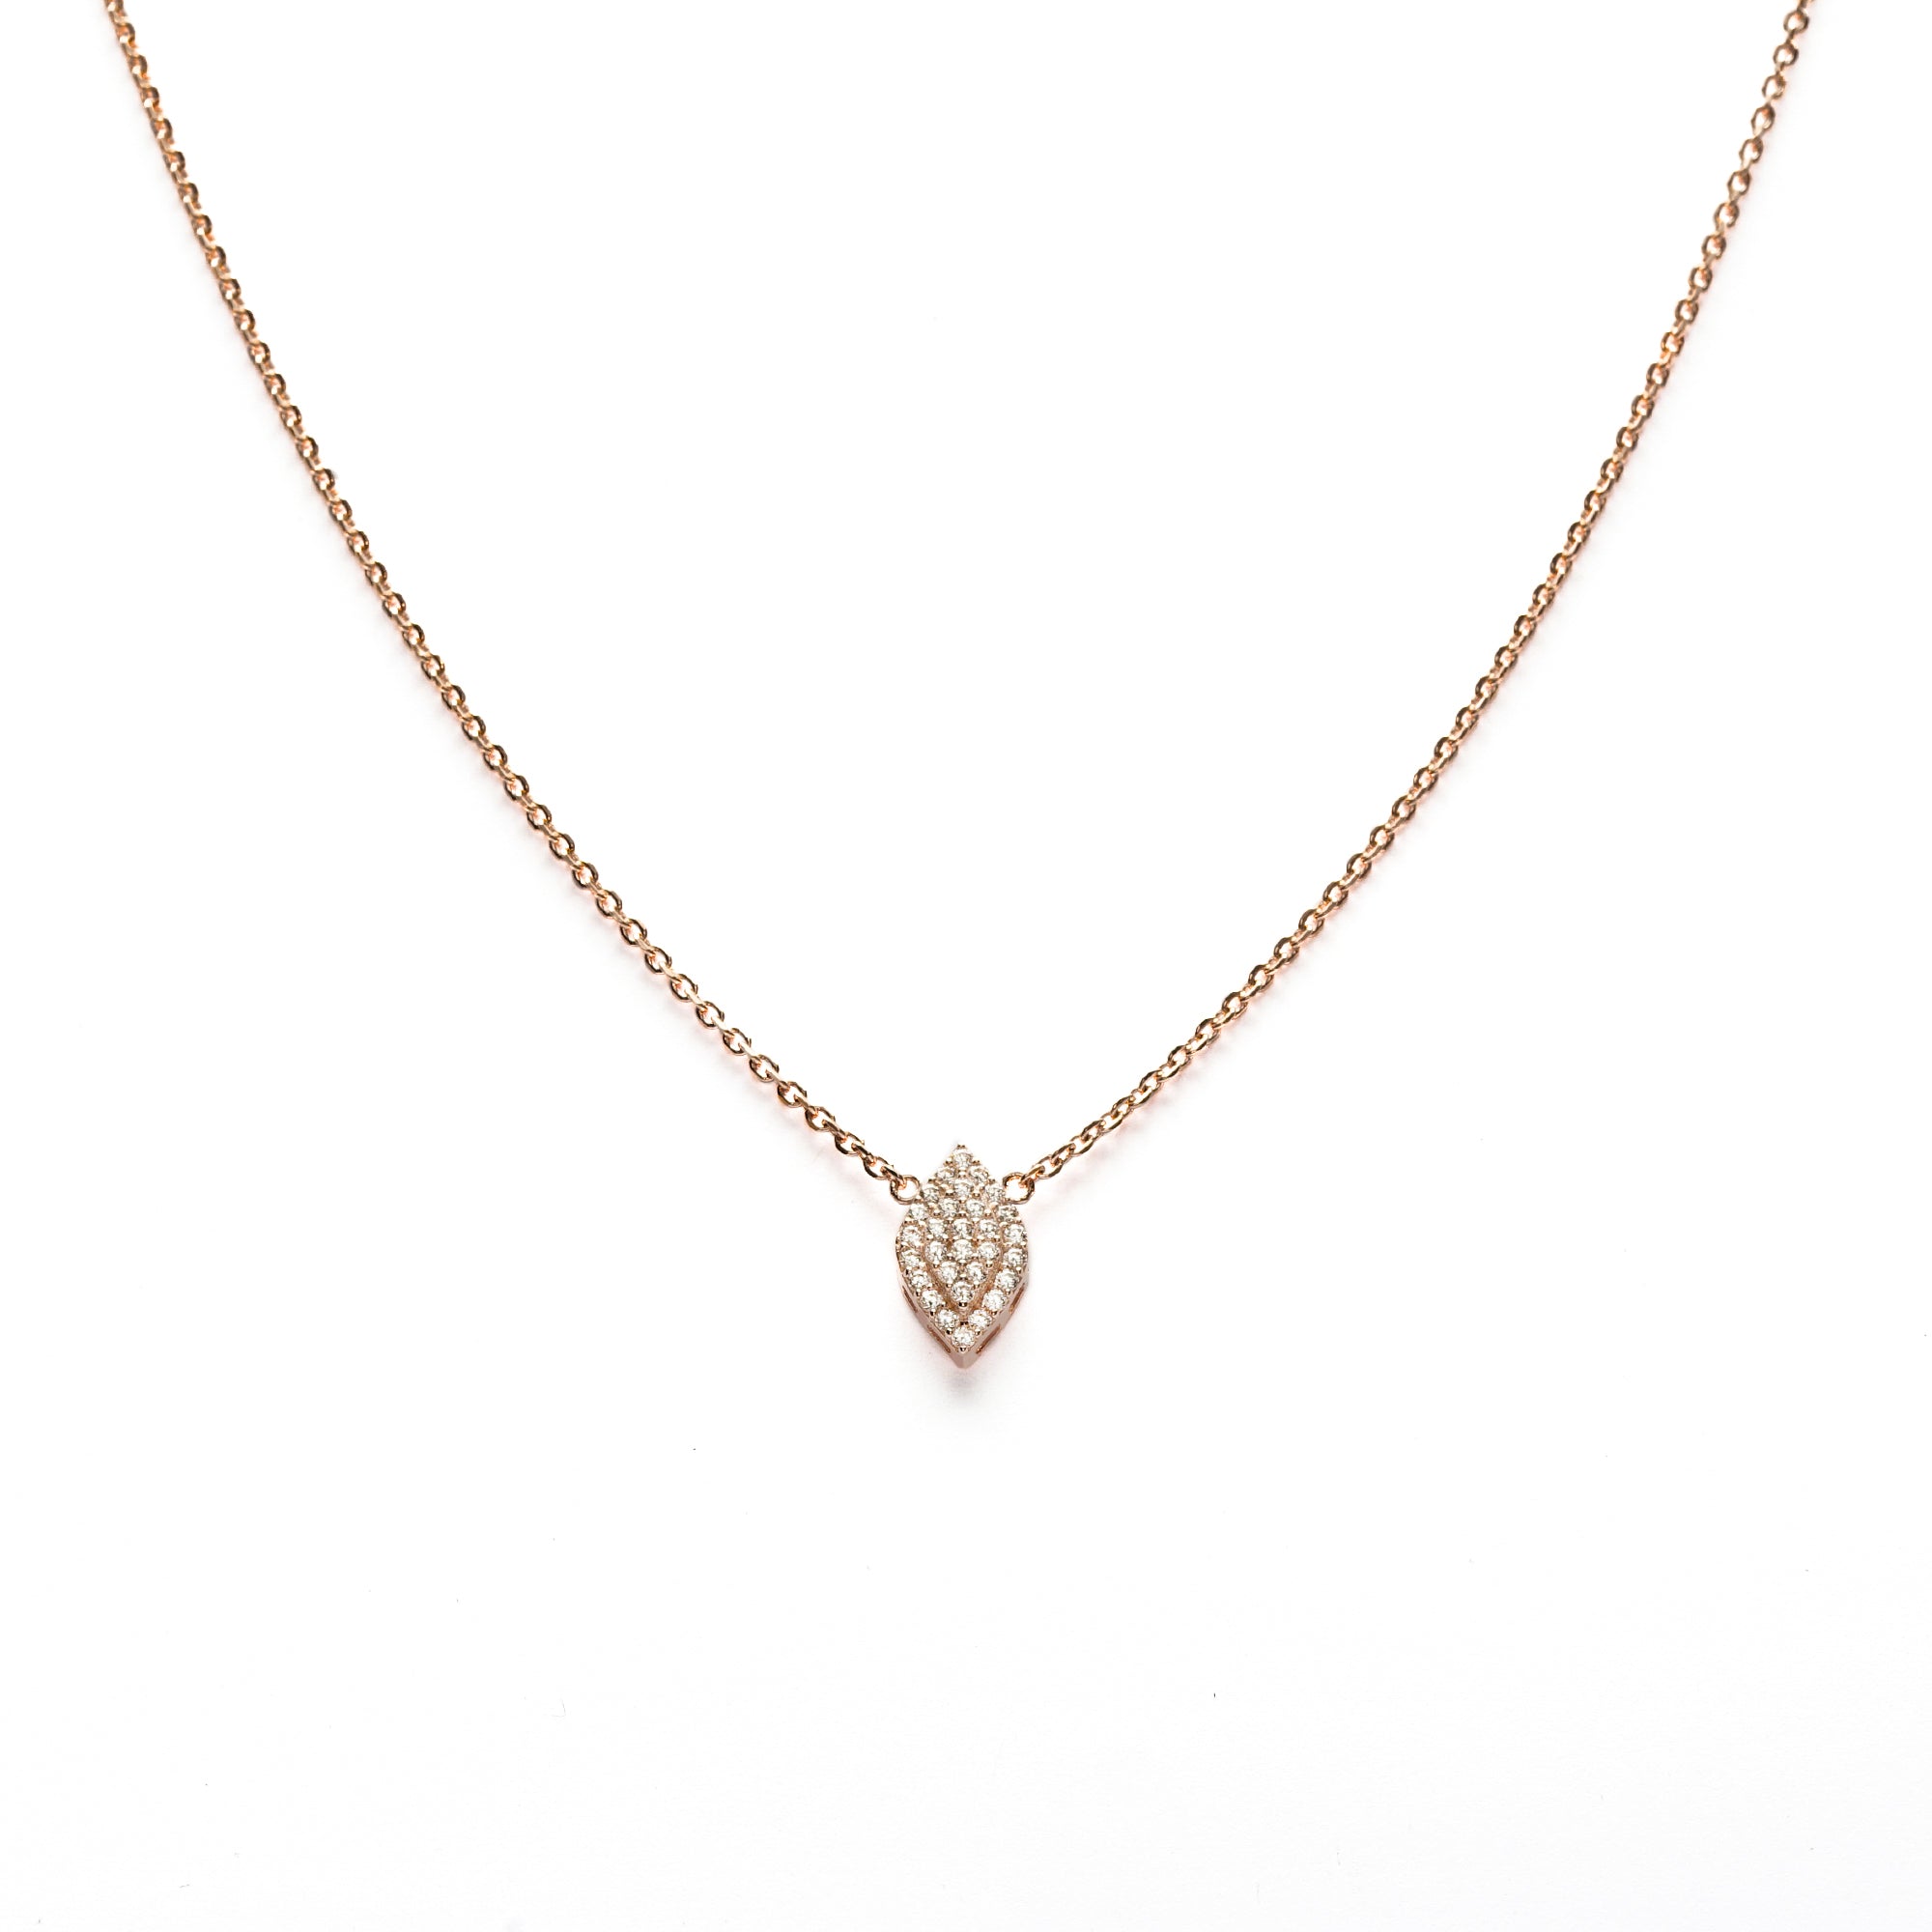 Martha Gold Necklace - Radiance - Juene Jewelry